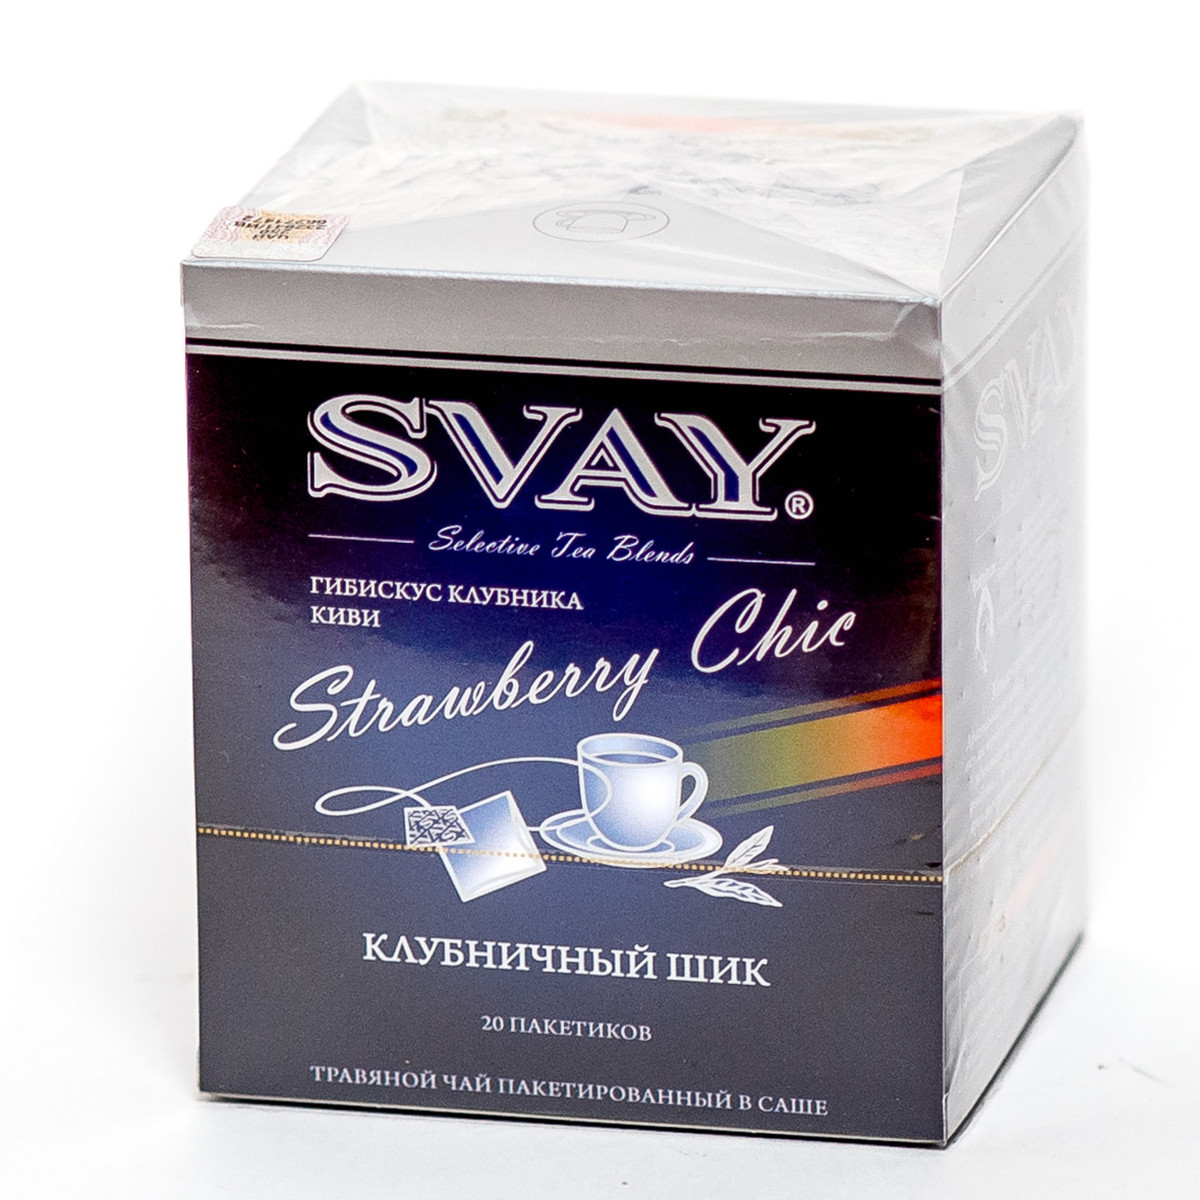 Чай "Svay Strawberry Chic", ТМ "SVAY" чай цветочный каркаде, клубника, киви (пакетированный саше 20х2 гр)